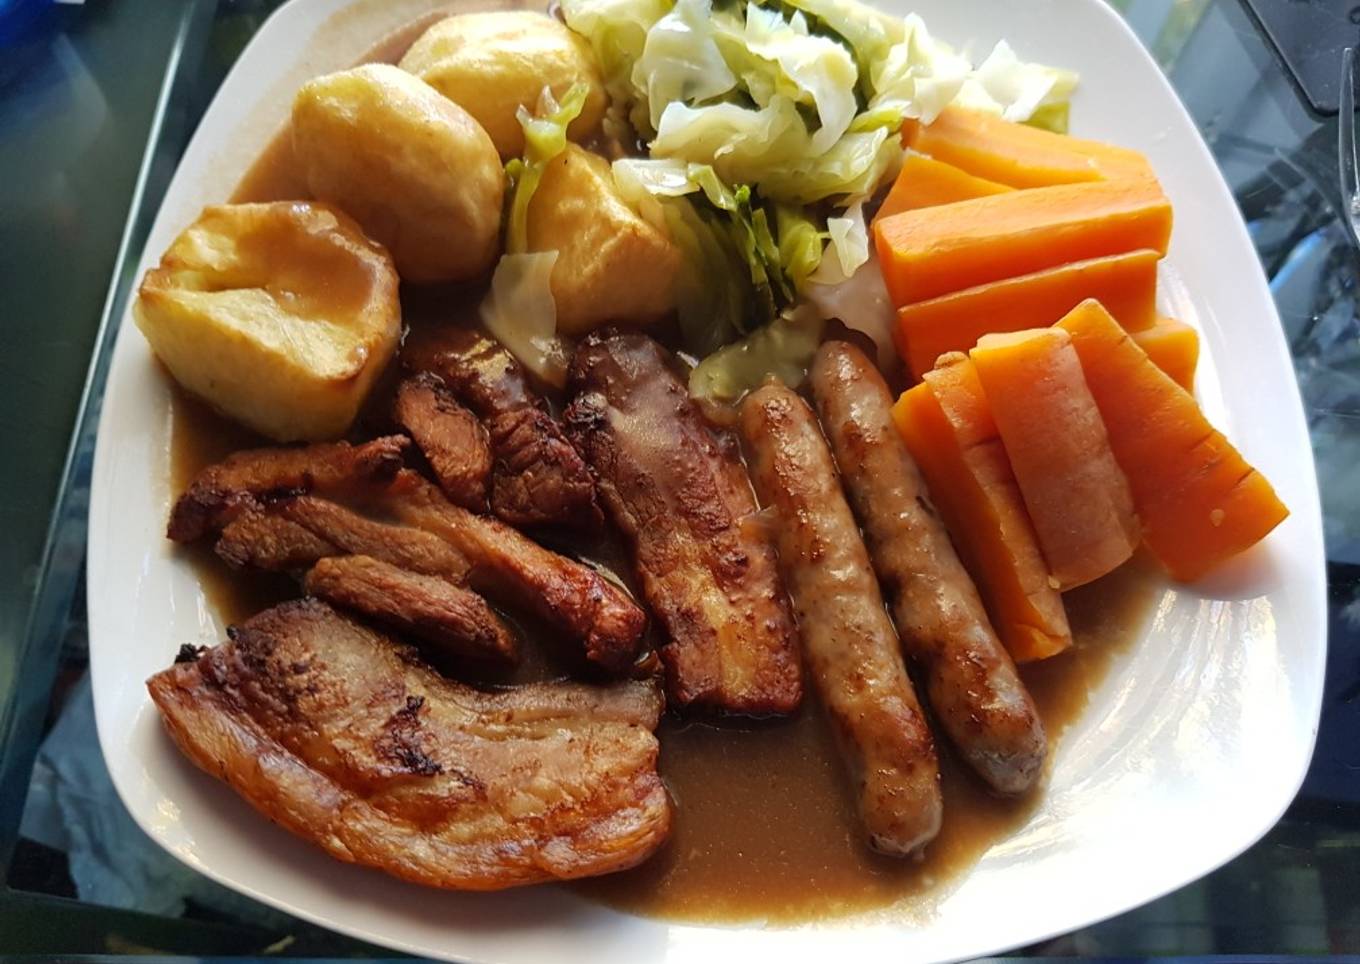 Belly pork and Pork Sausage Roast. 😘